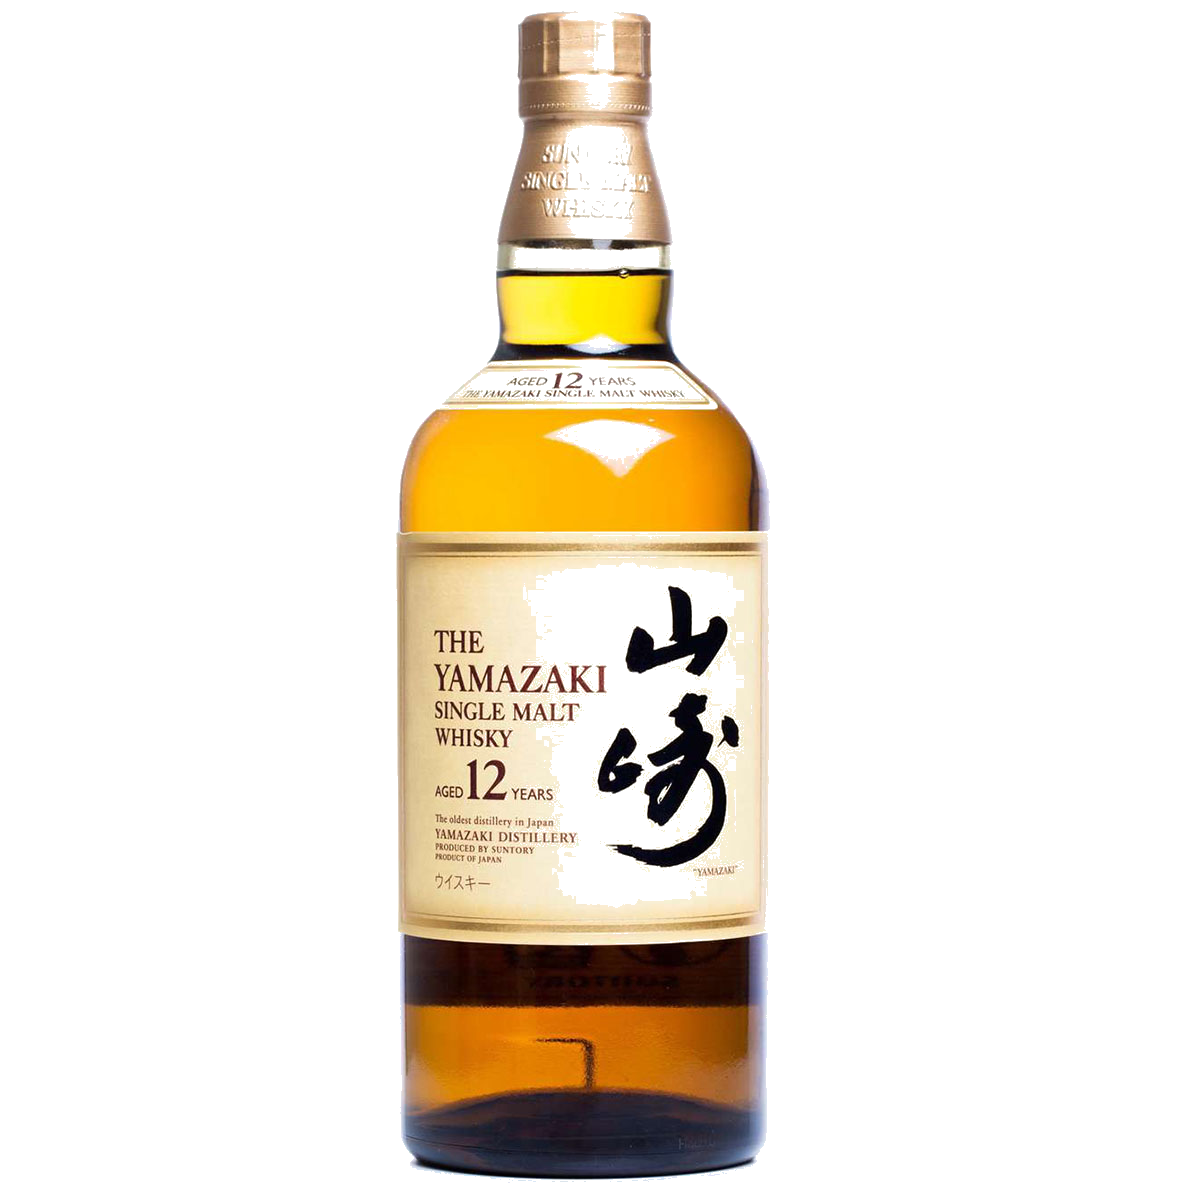 Inaizumi виски. Японский виски Ямазаки. Японский виски Yamazaki. Японский виски Single Malt. Виски Япония односолодовый.